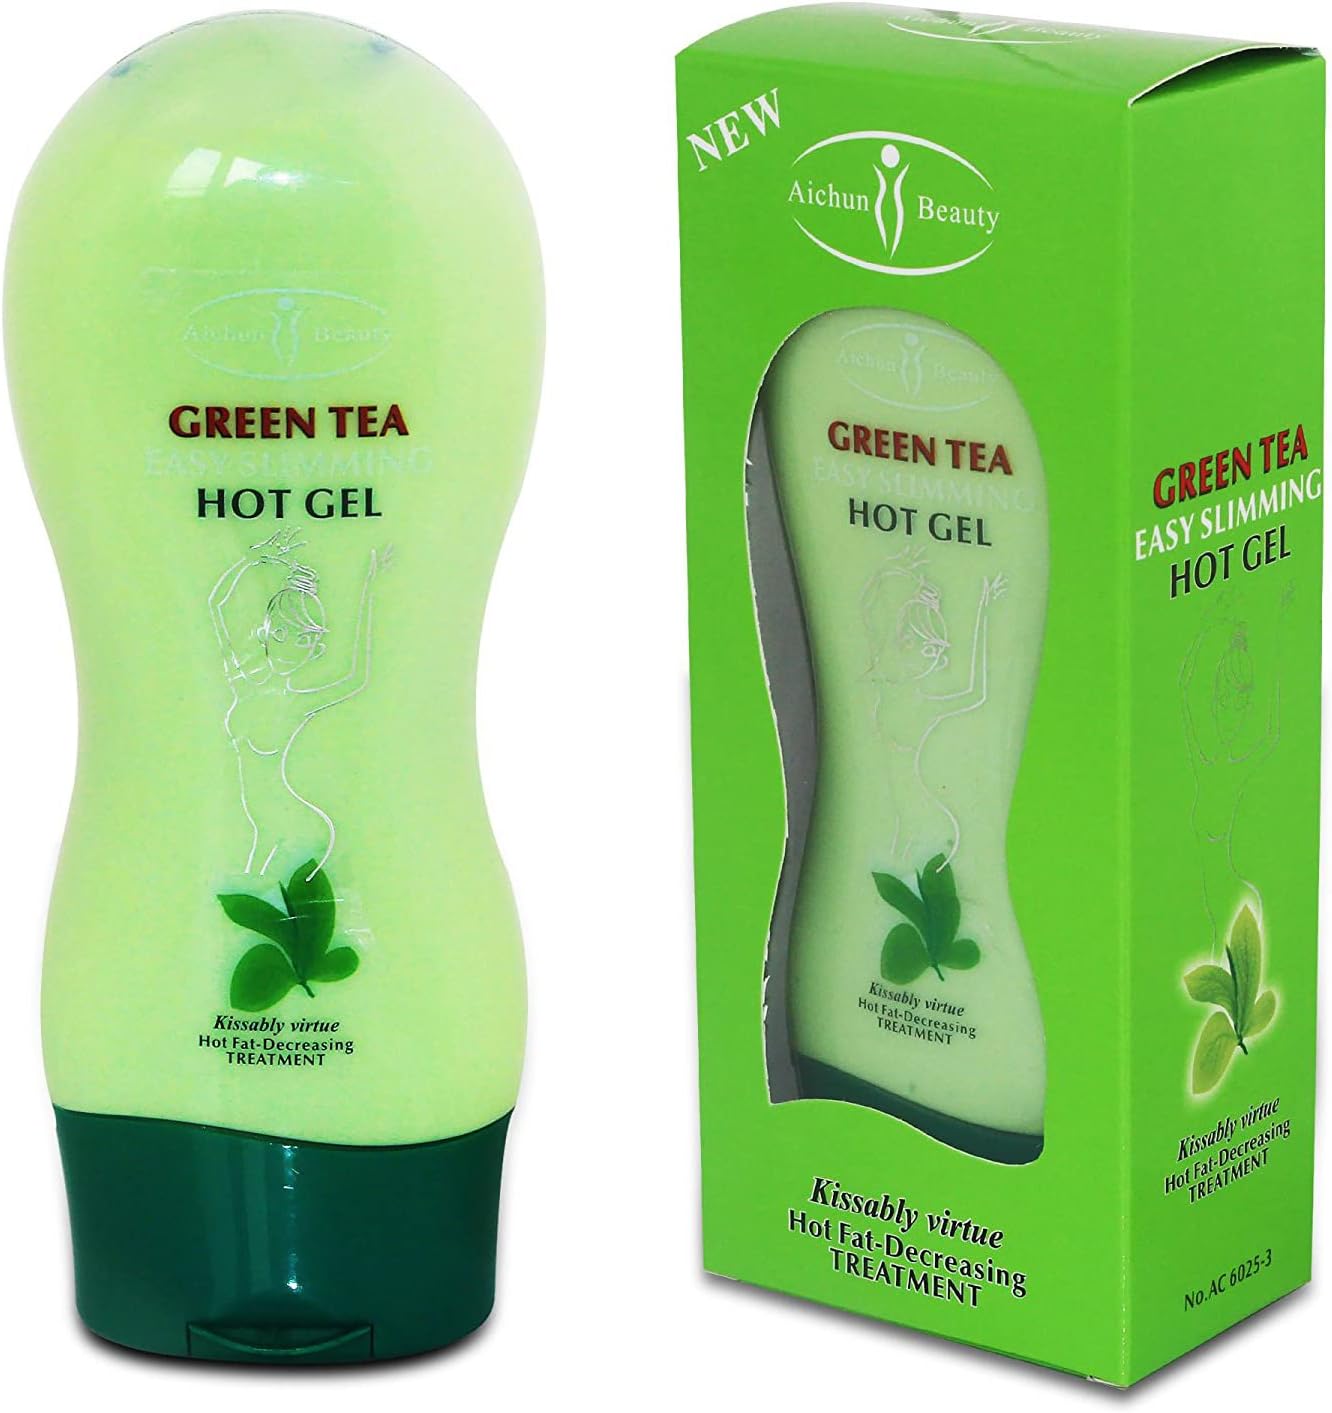 AICHUN BEAUTY Green Tea Paprika Slimming Gel Full-Body Fat Burning Fast Weight Loss Cream Review